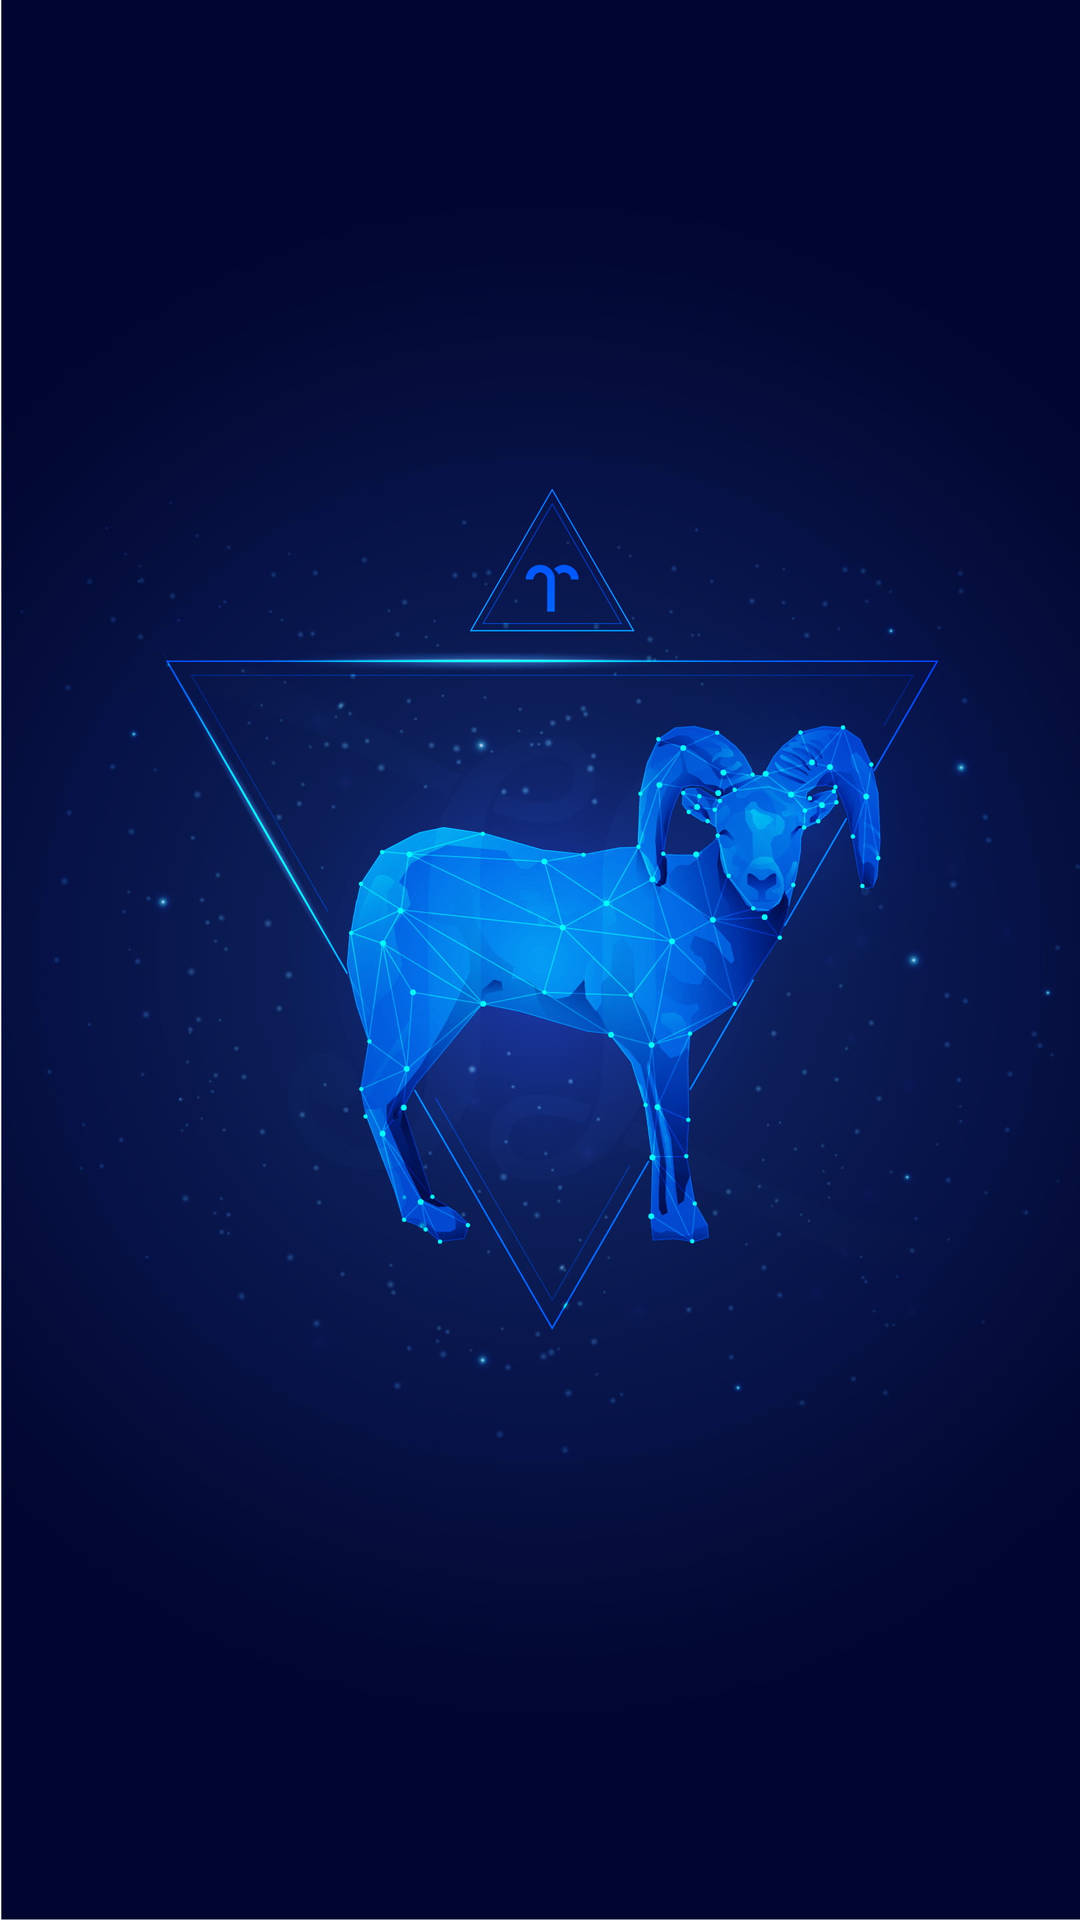 Aesthetic Blue Aries Ram Constellation Wallpaper